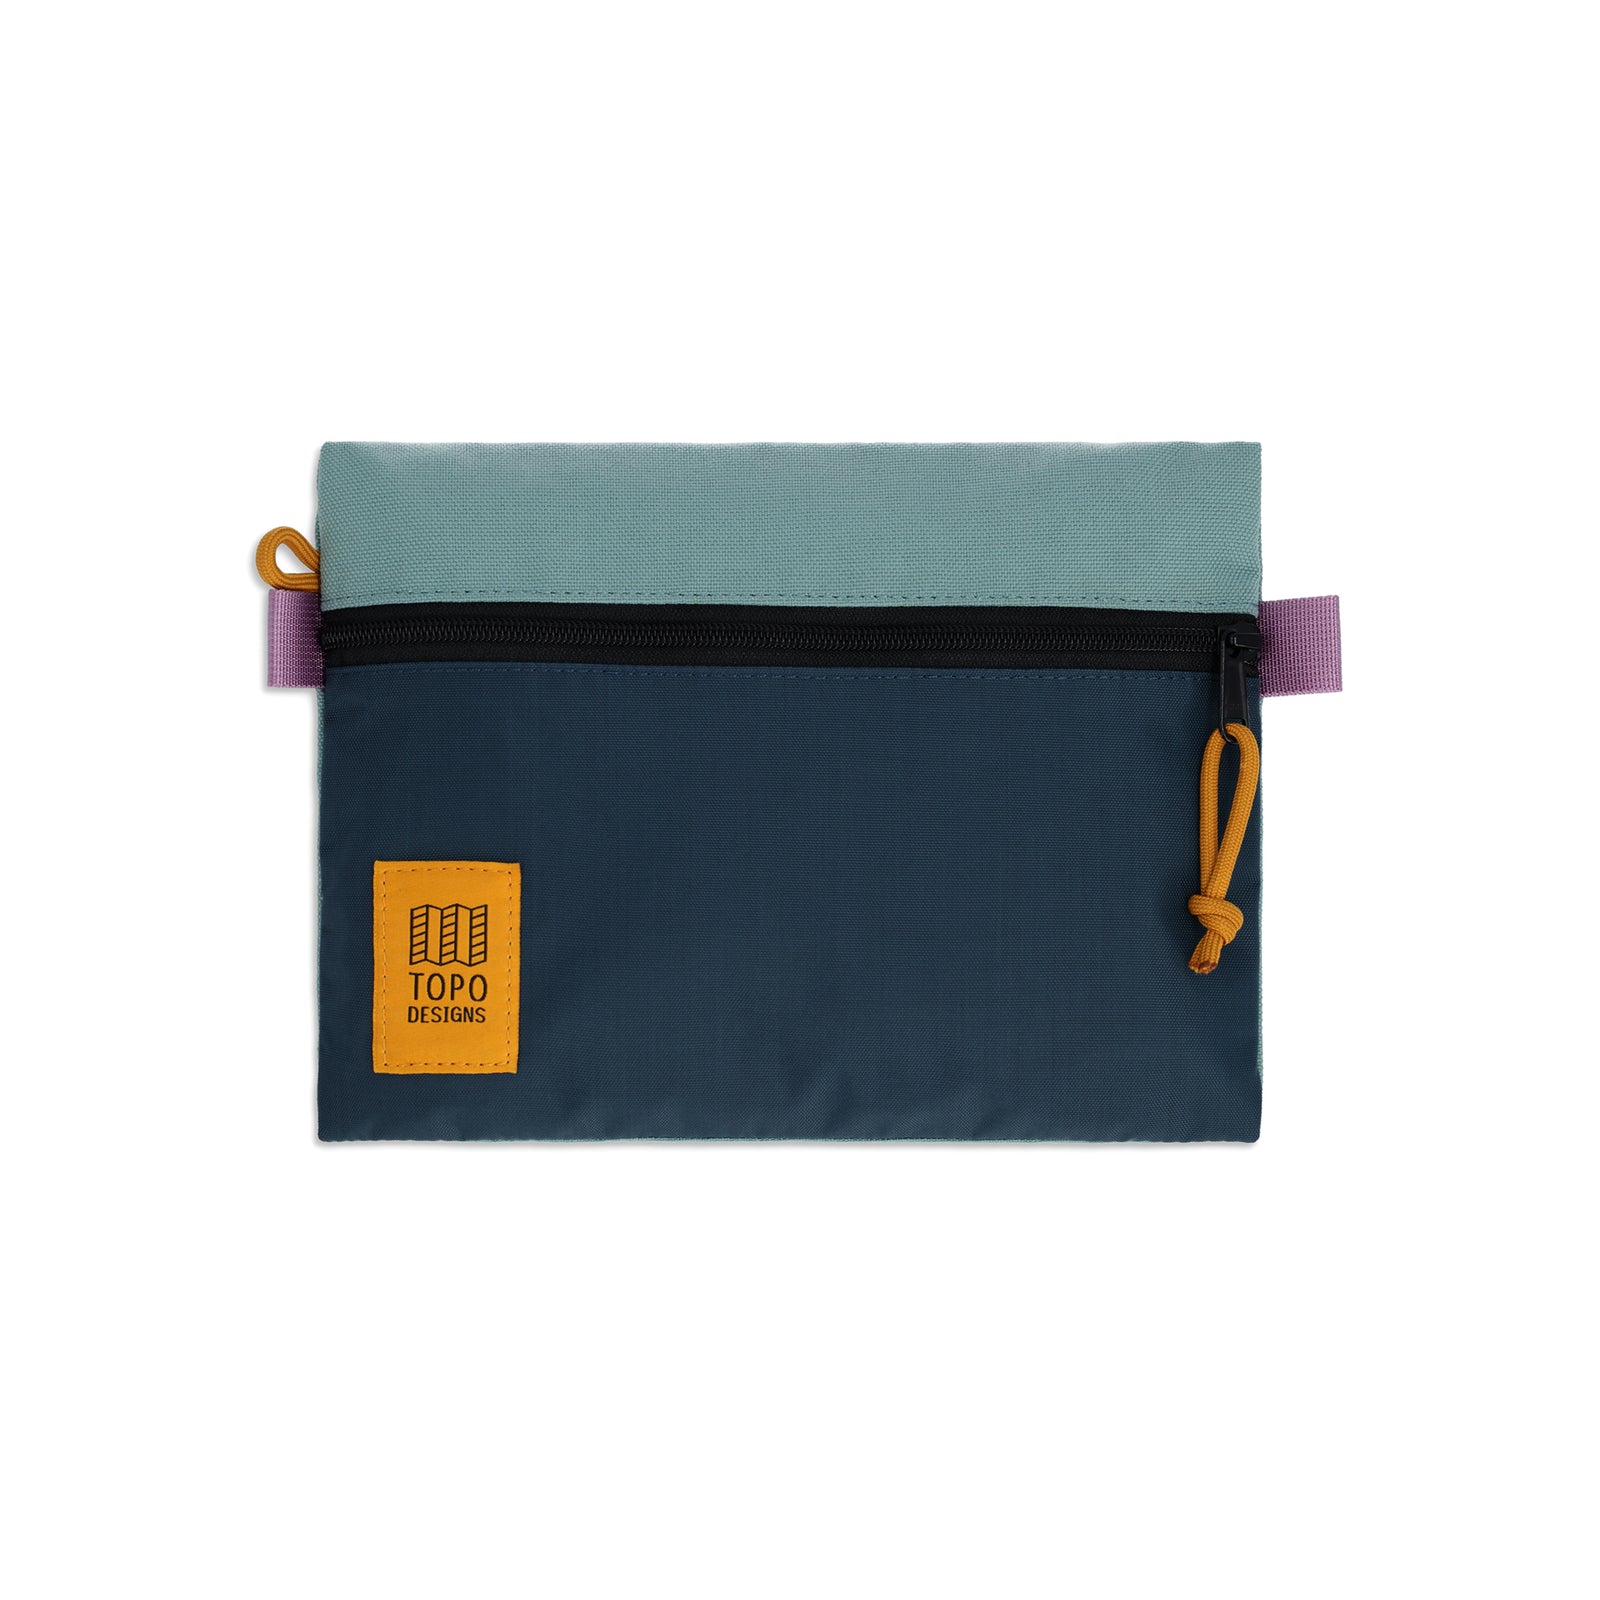 Topo Designs Accessory Bag "Medium" in "Sage / Pond Blue""